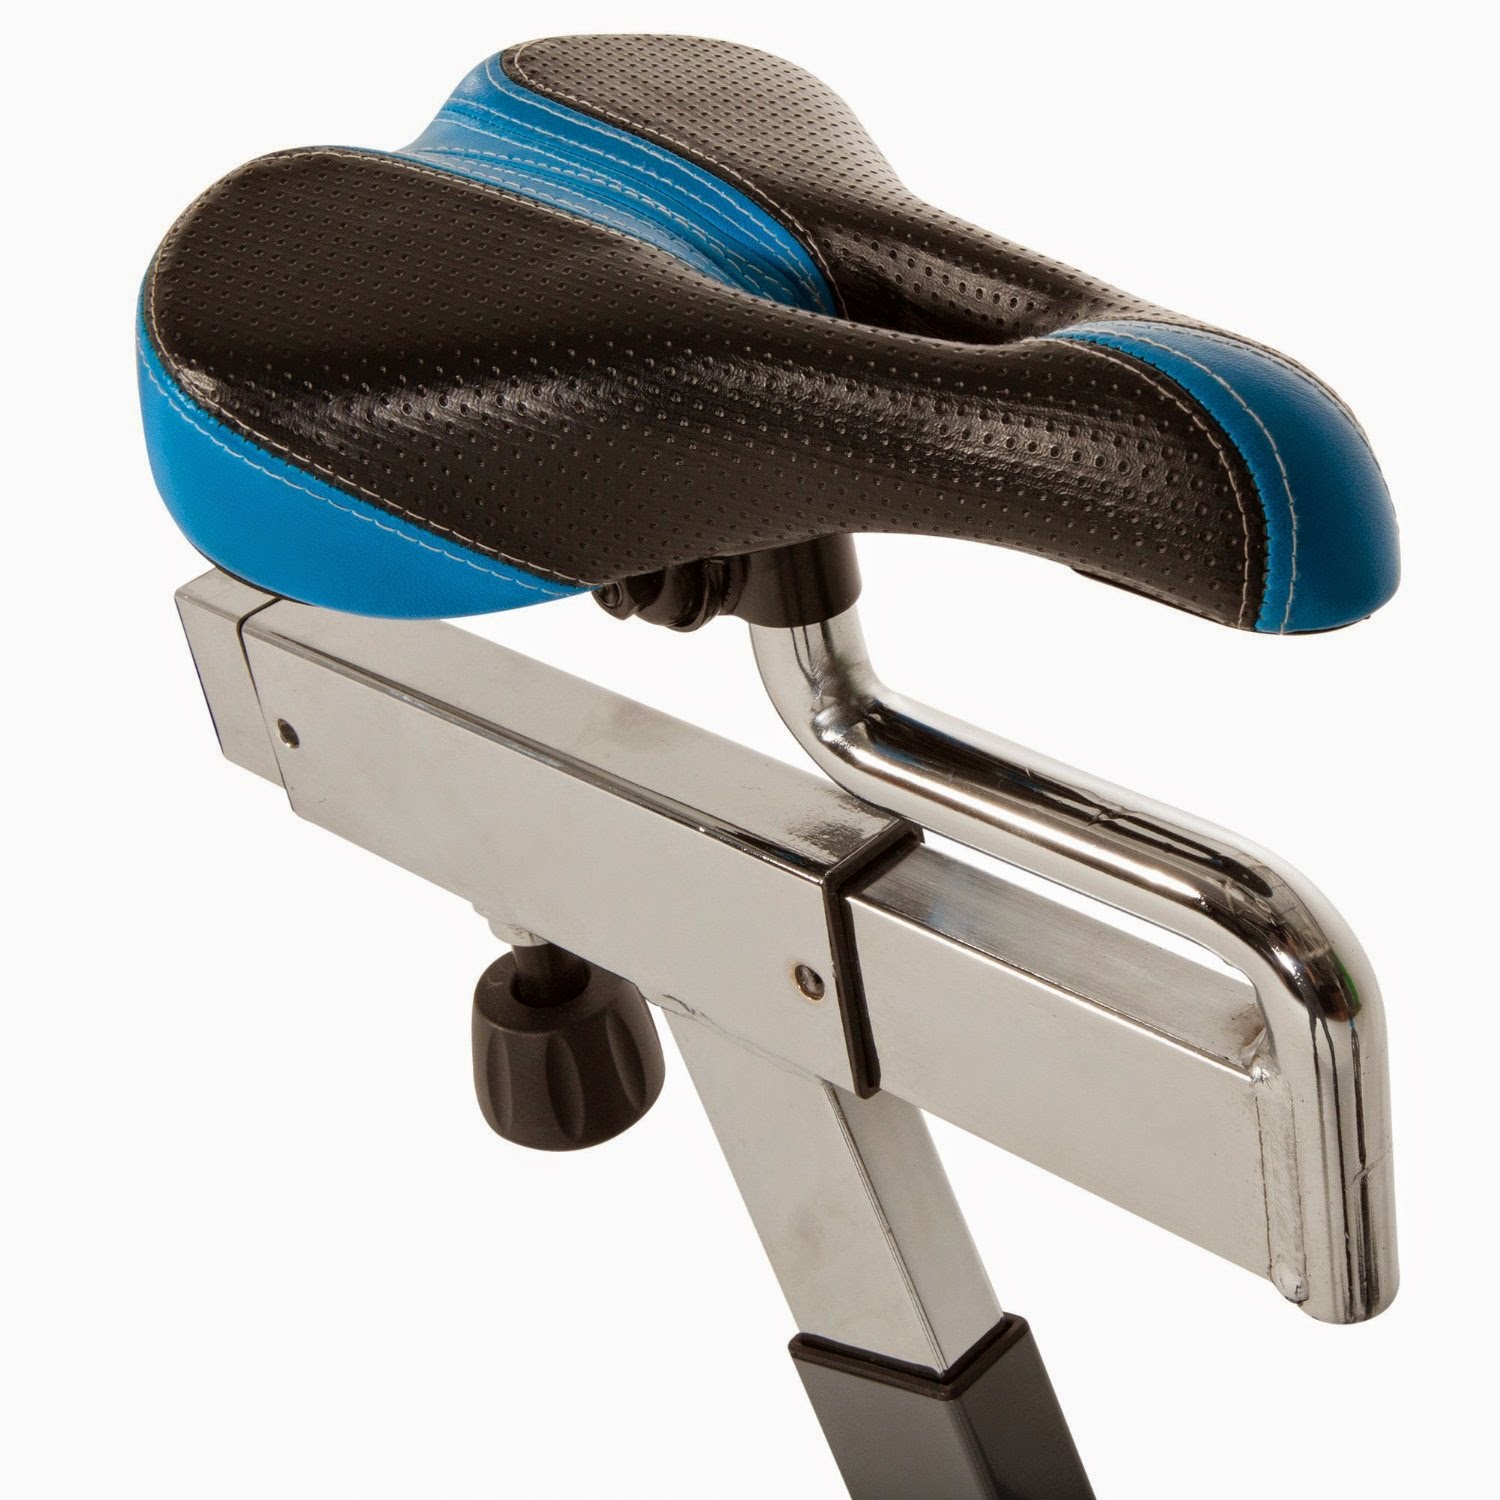 ProGear 120Xi Indoor Training Cycle, 4-way adjustable cushioned ergonomic seat